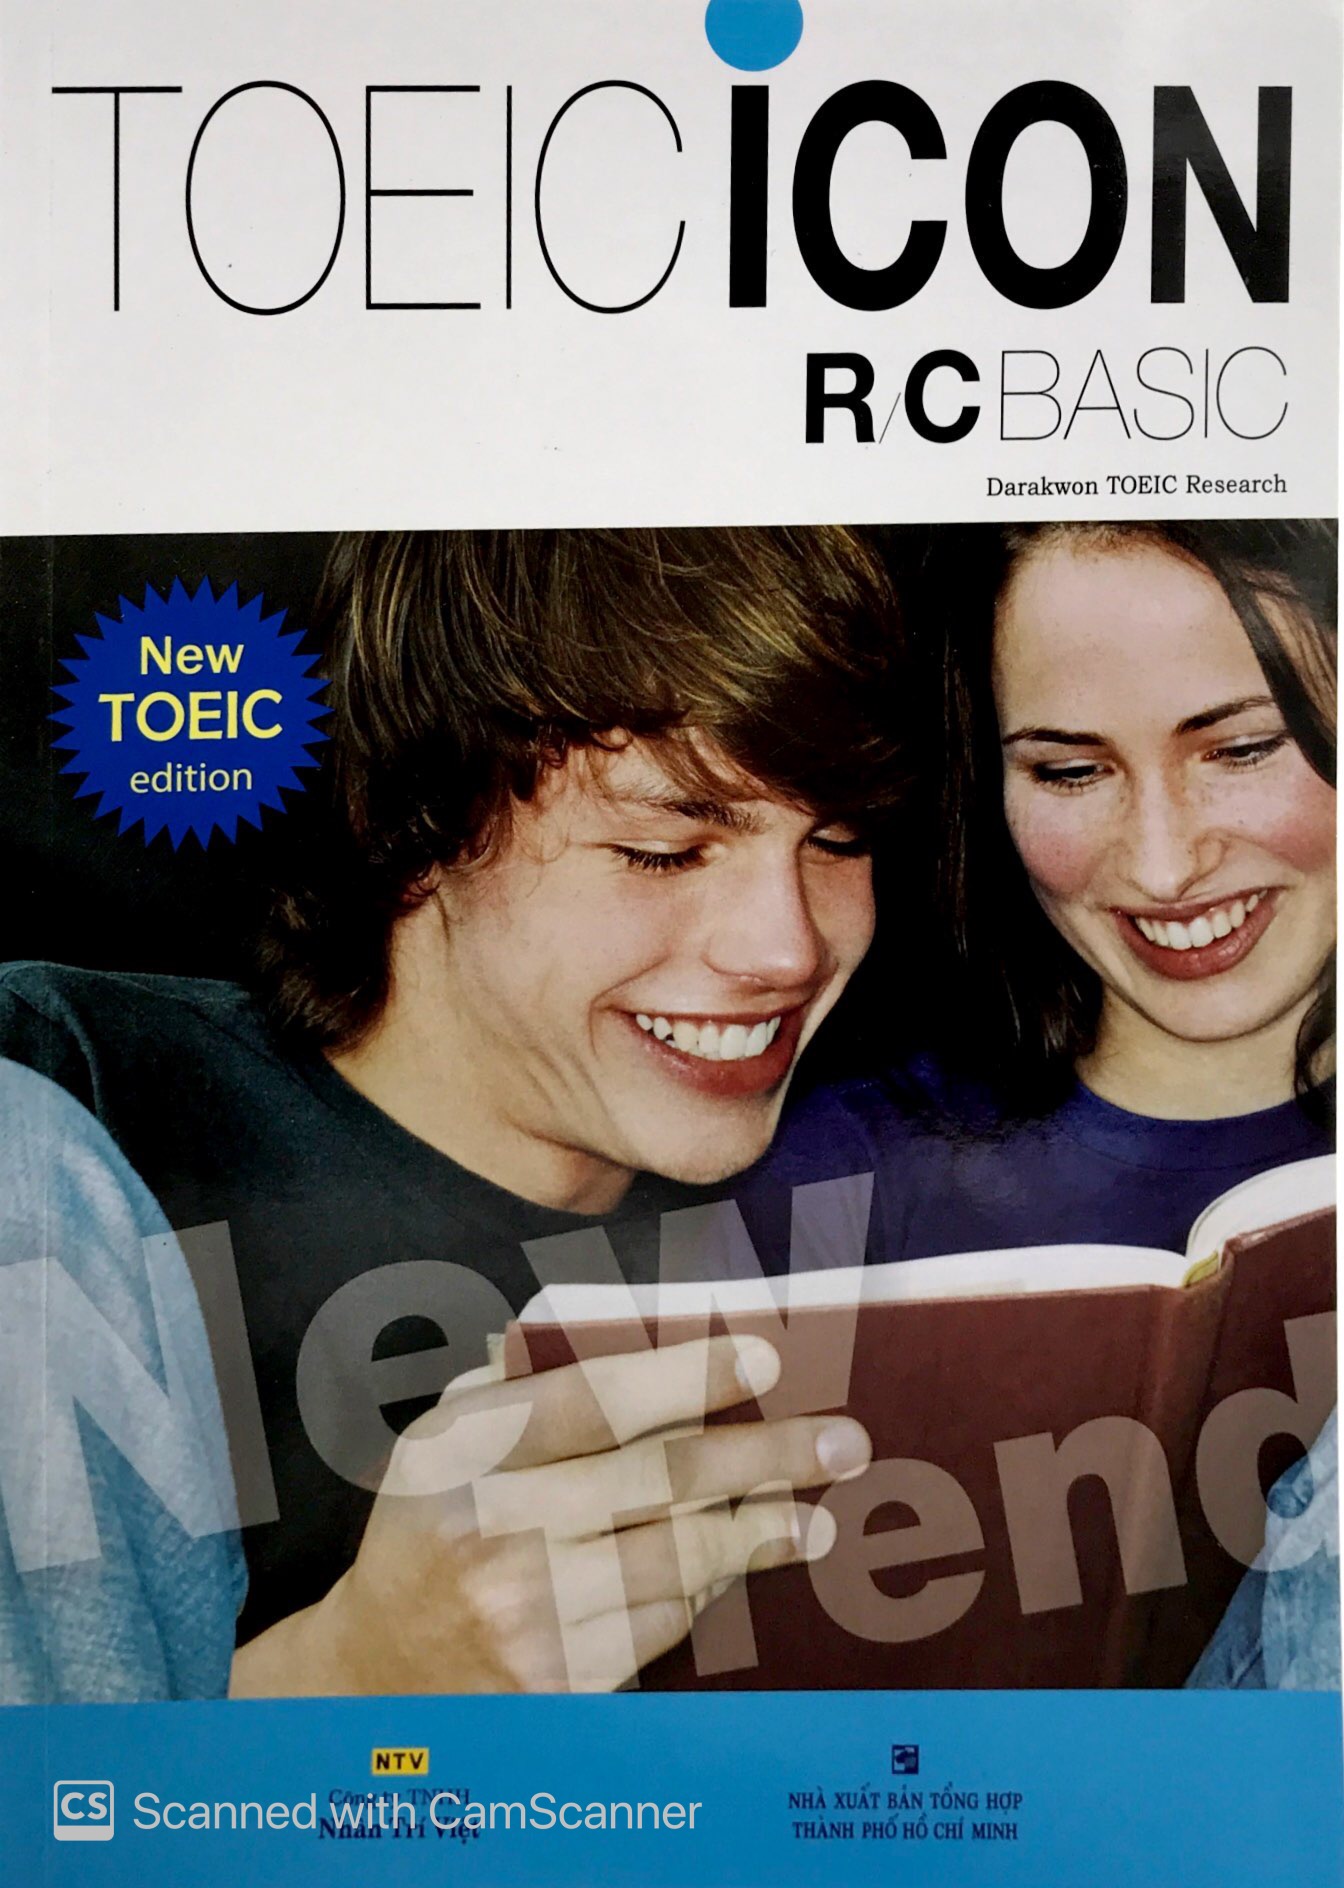 TOEIC Icon - R/C Basic PDF